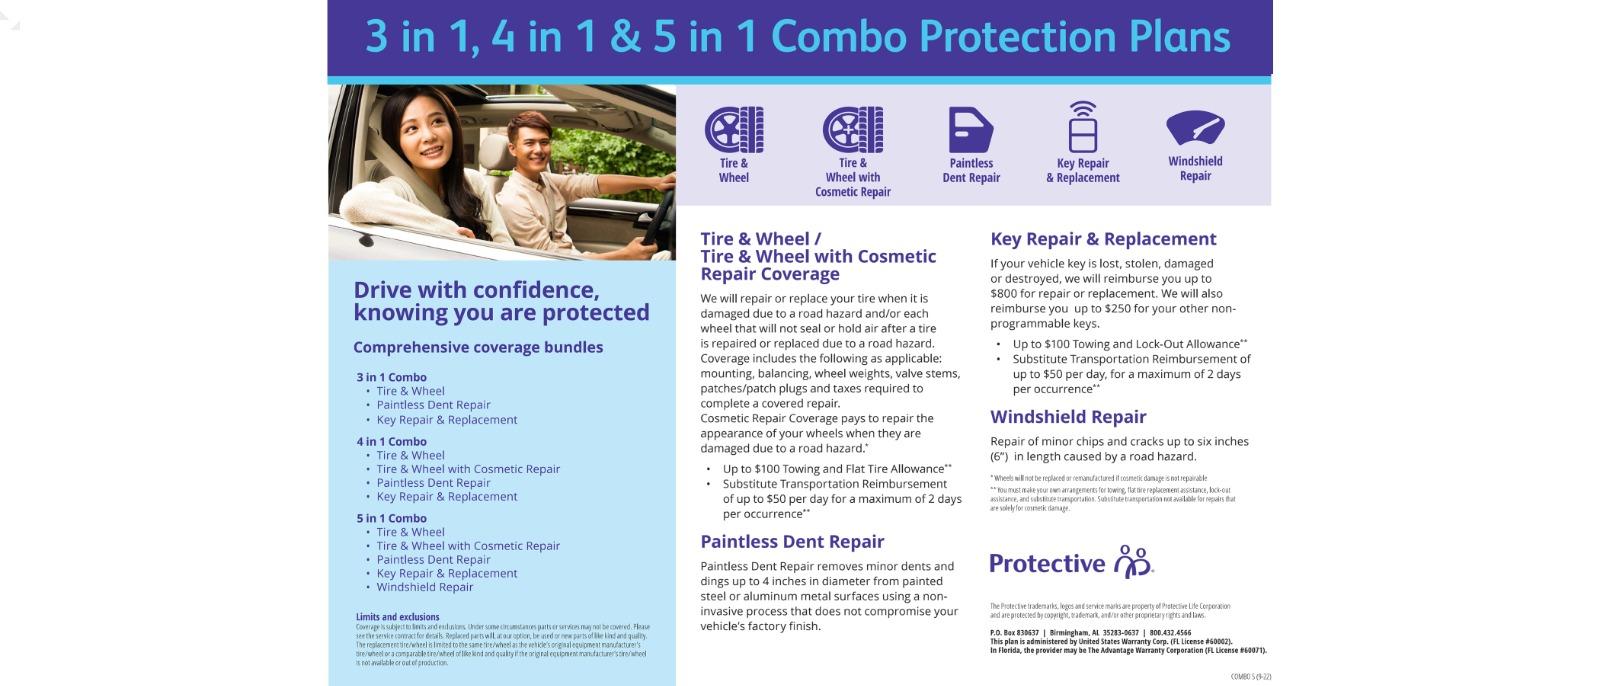 Combo Protection Plan